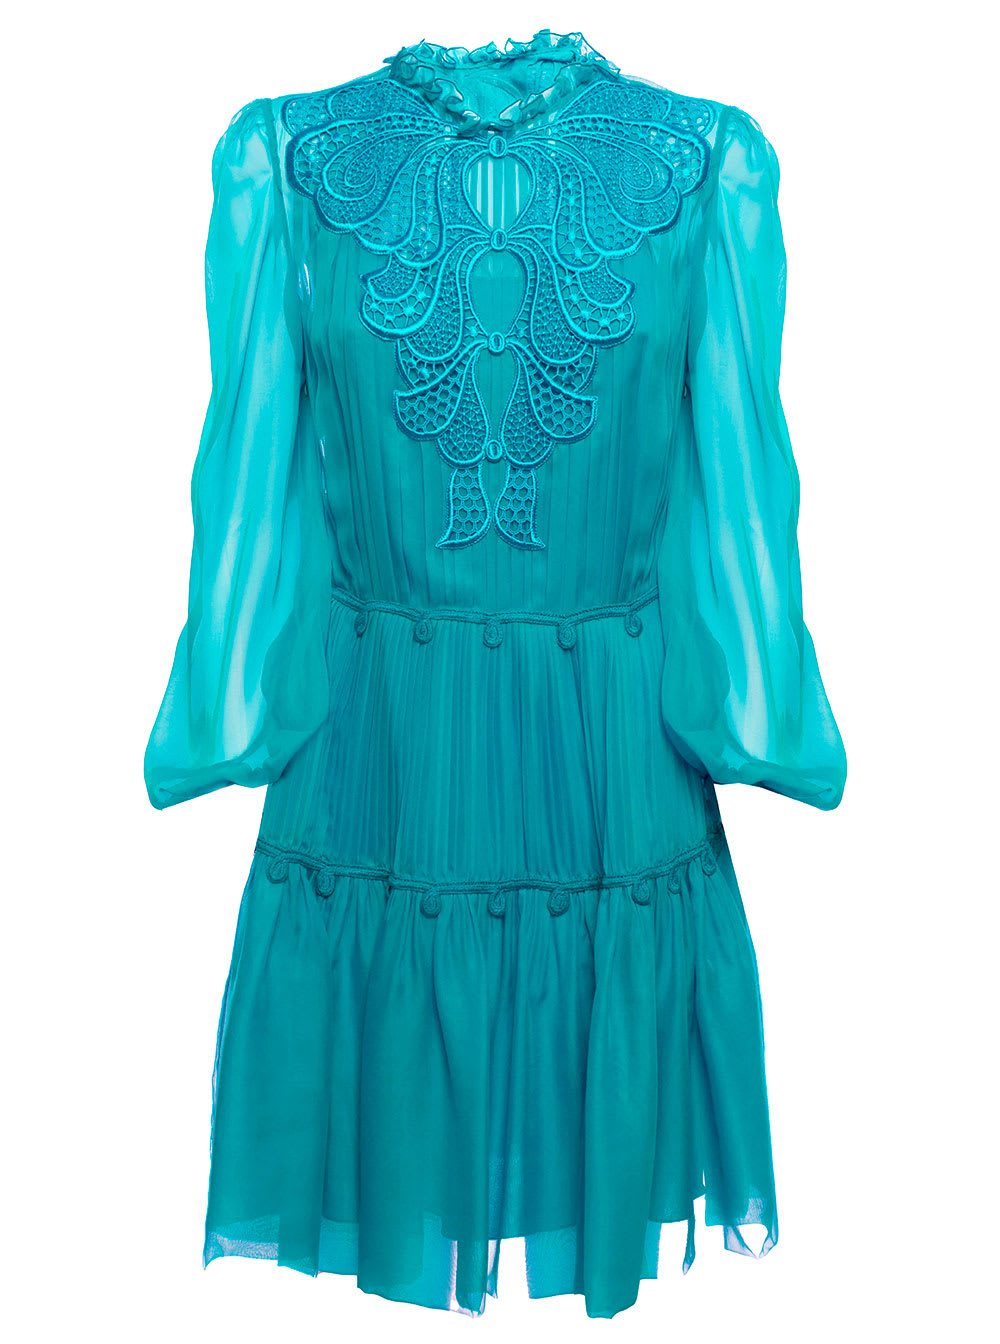 Alberta Ferretti Womans Light Blue Chiffon Dress With Embroidery